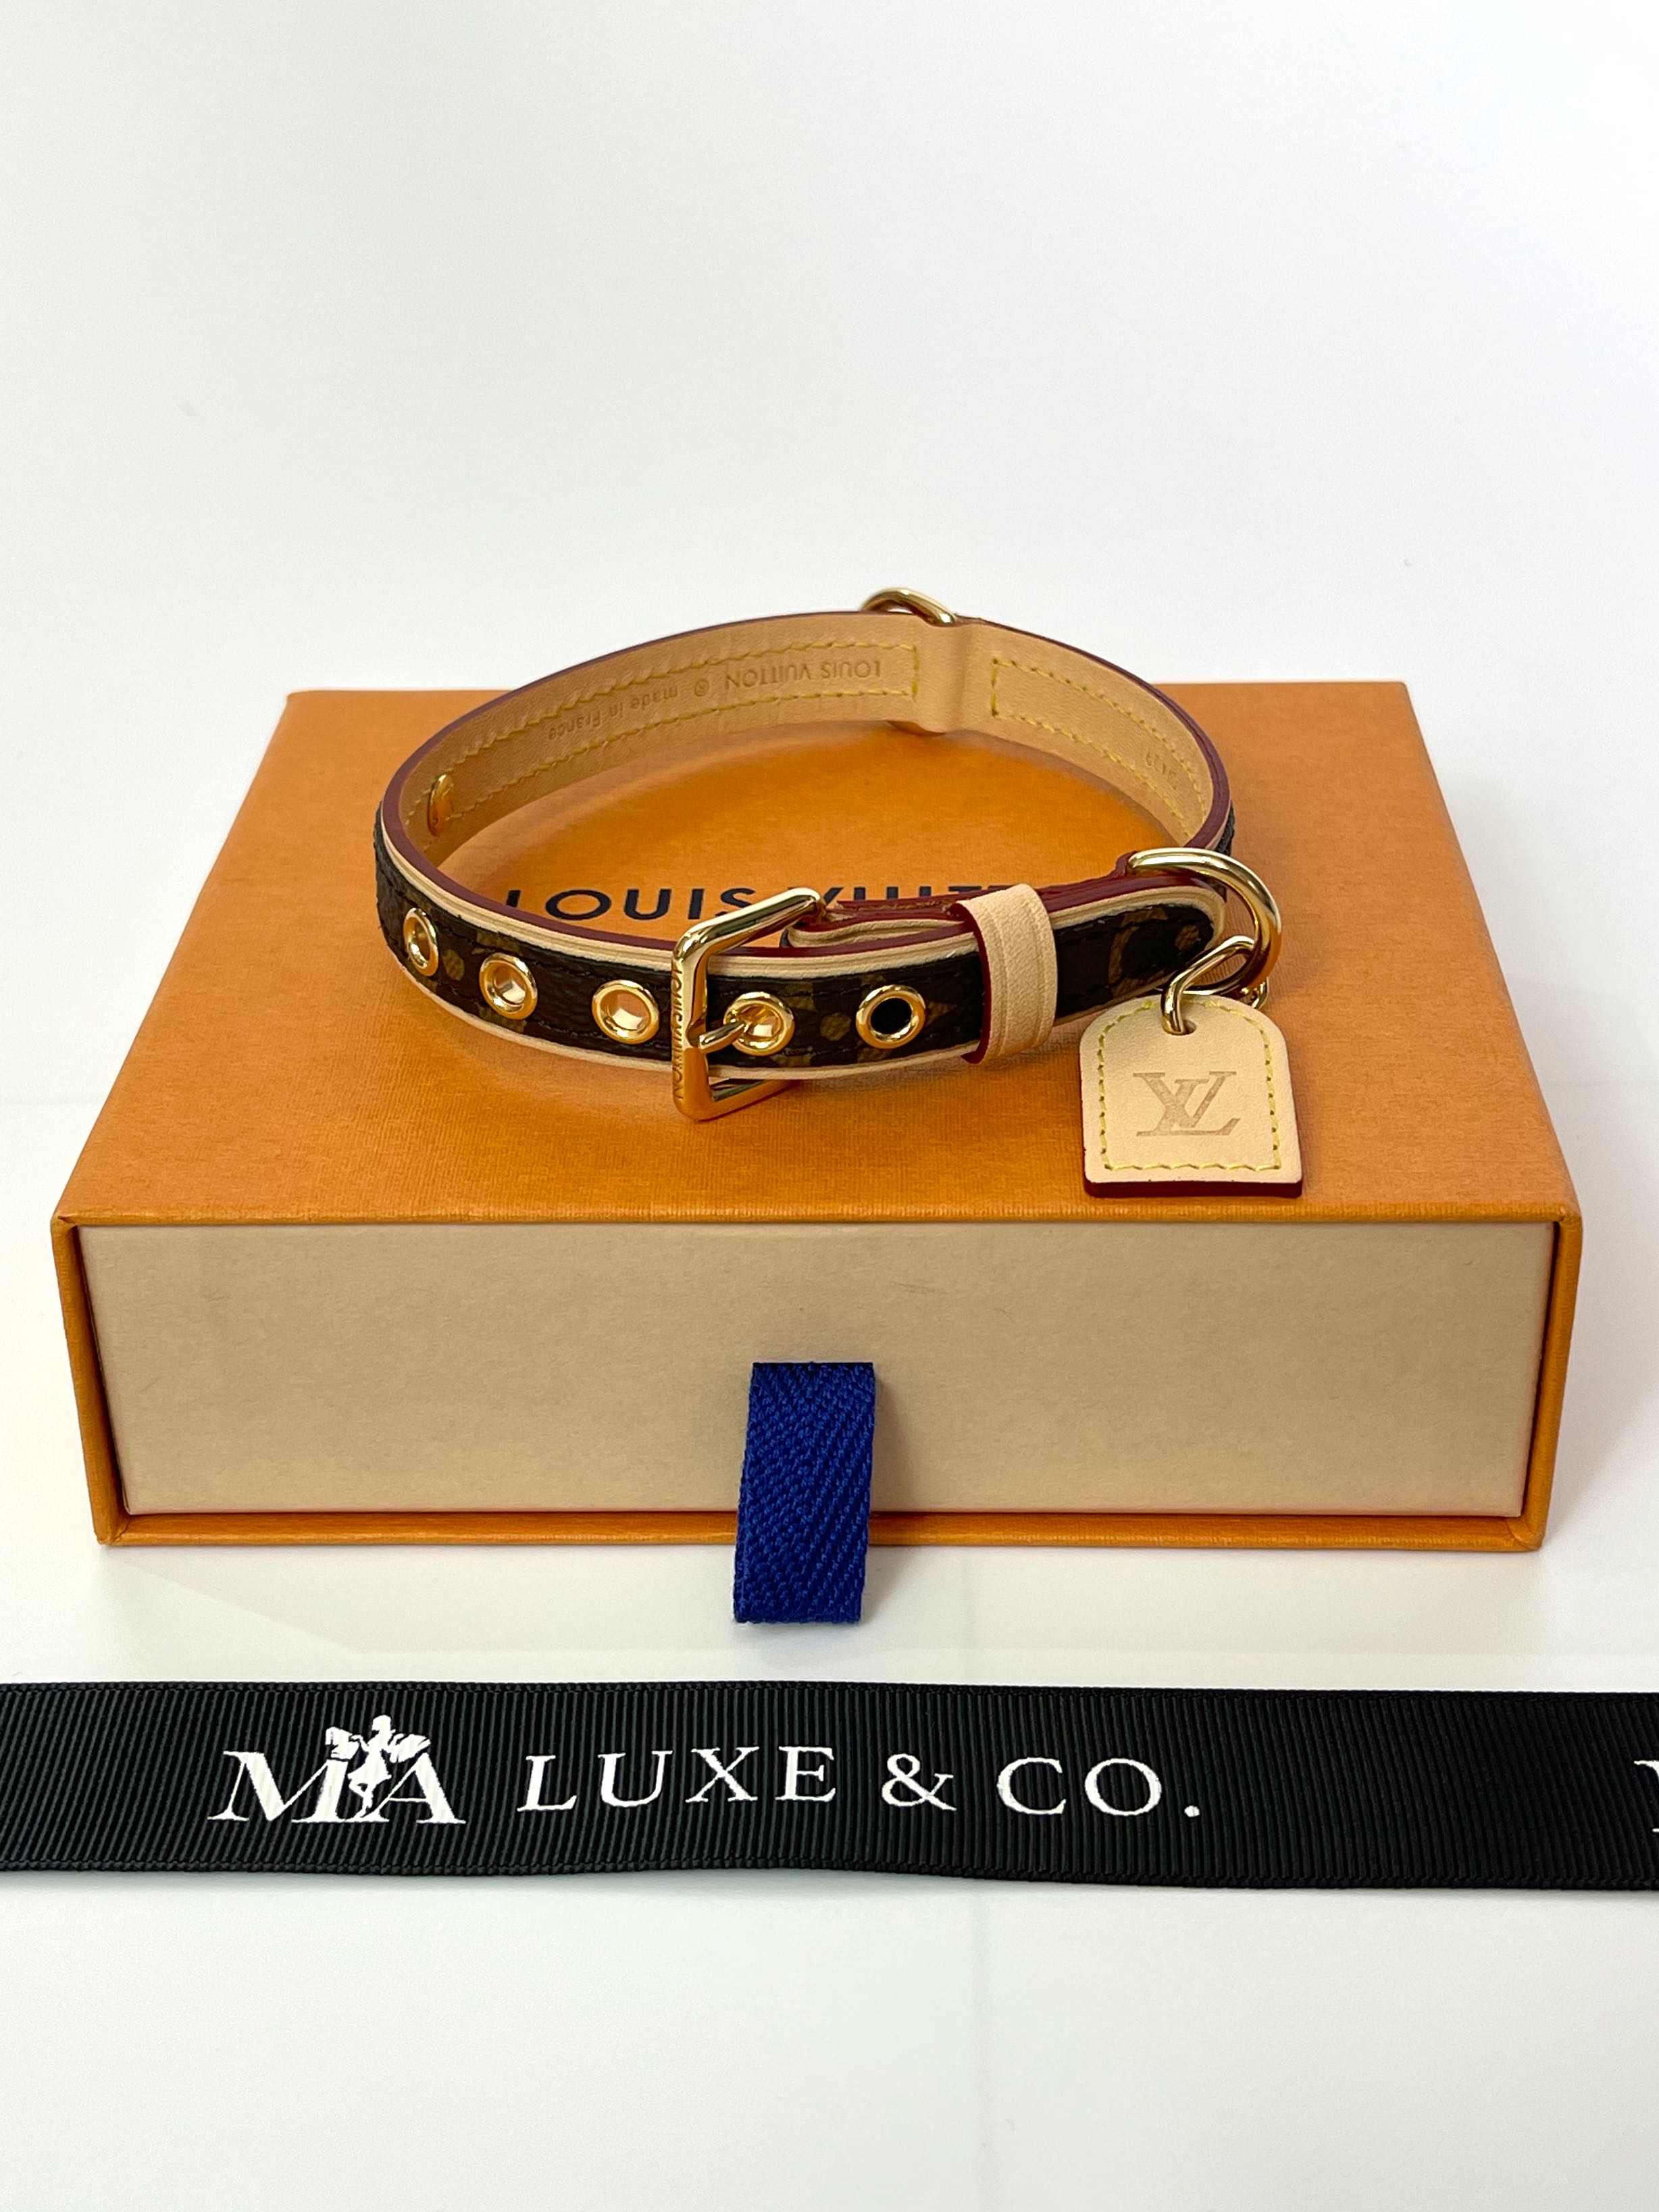 LOUIS VUITTON Collier Baxter PM Dog Collar for Small Dog SL1022 Unused  wBox  eBay